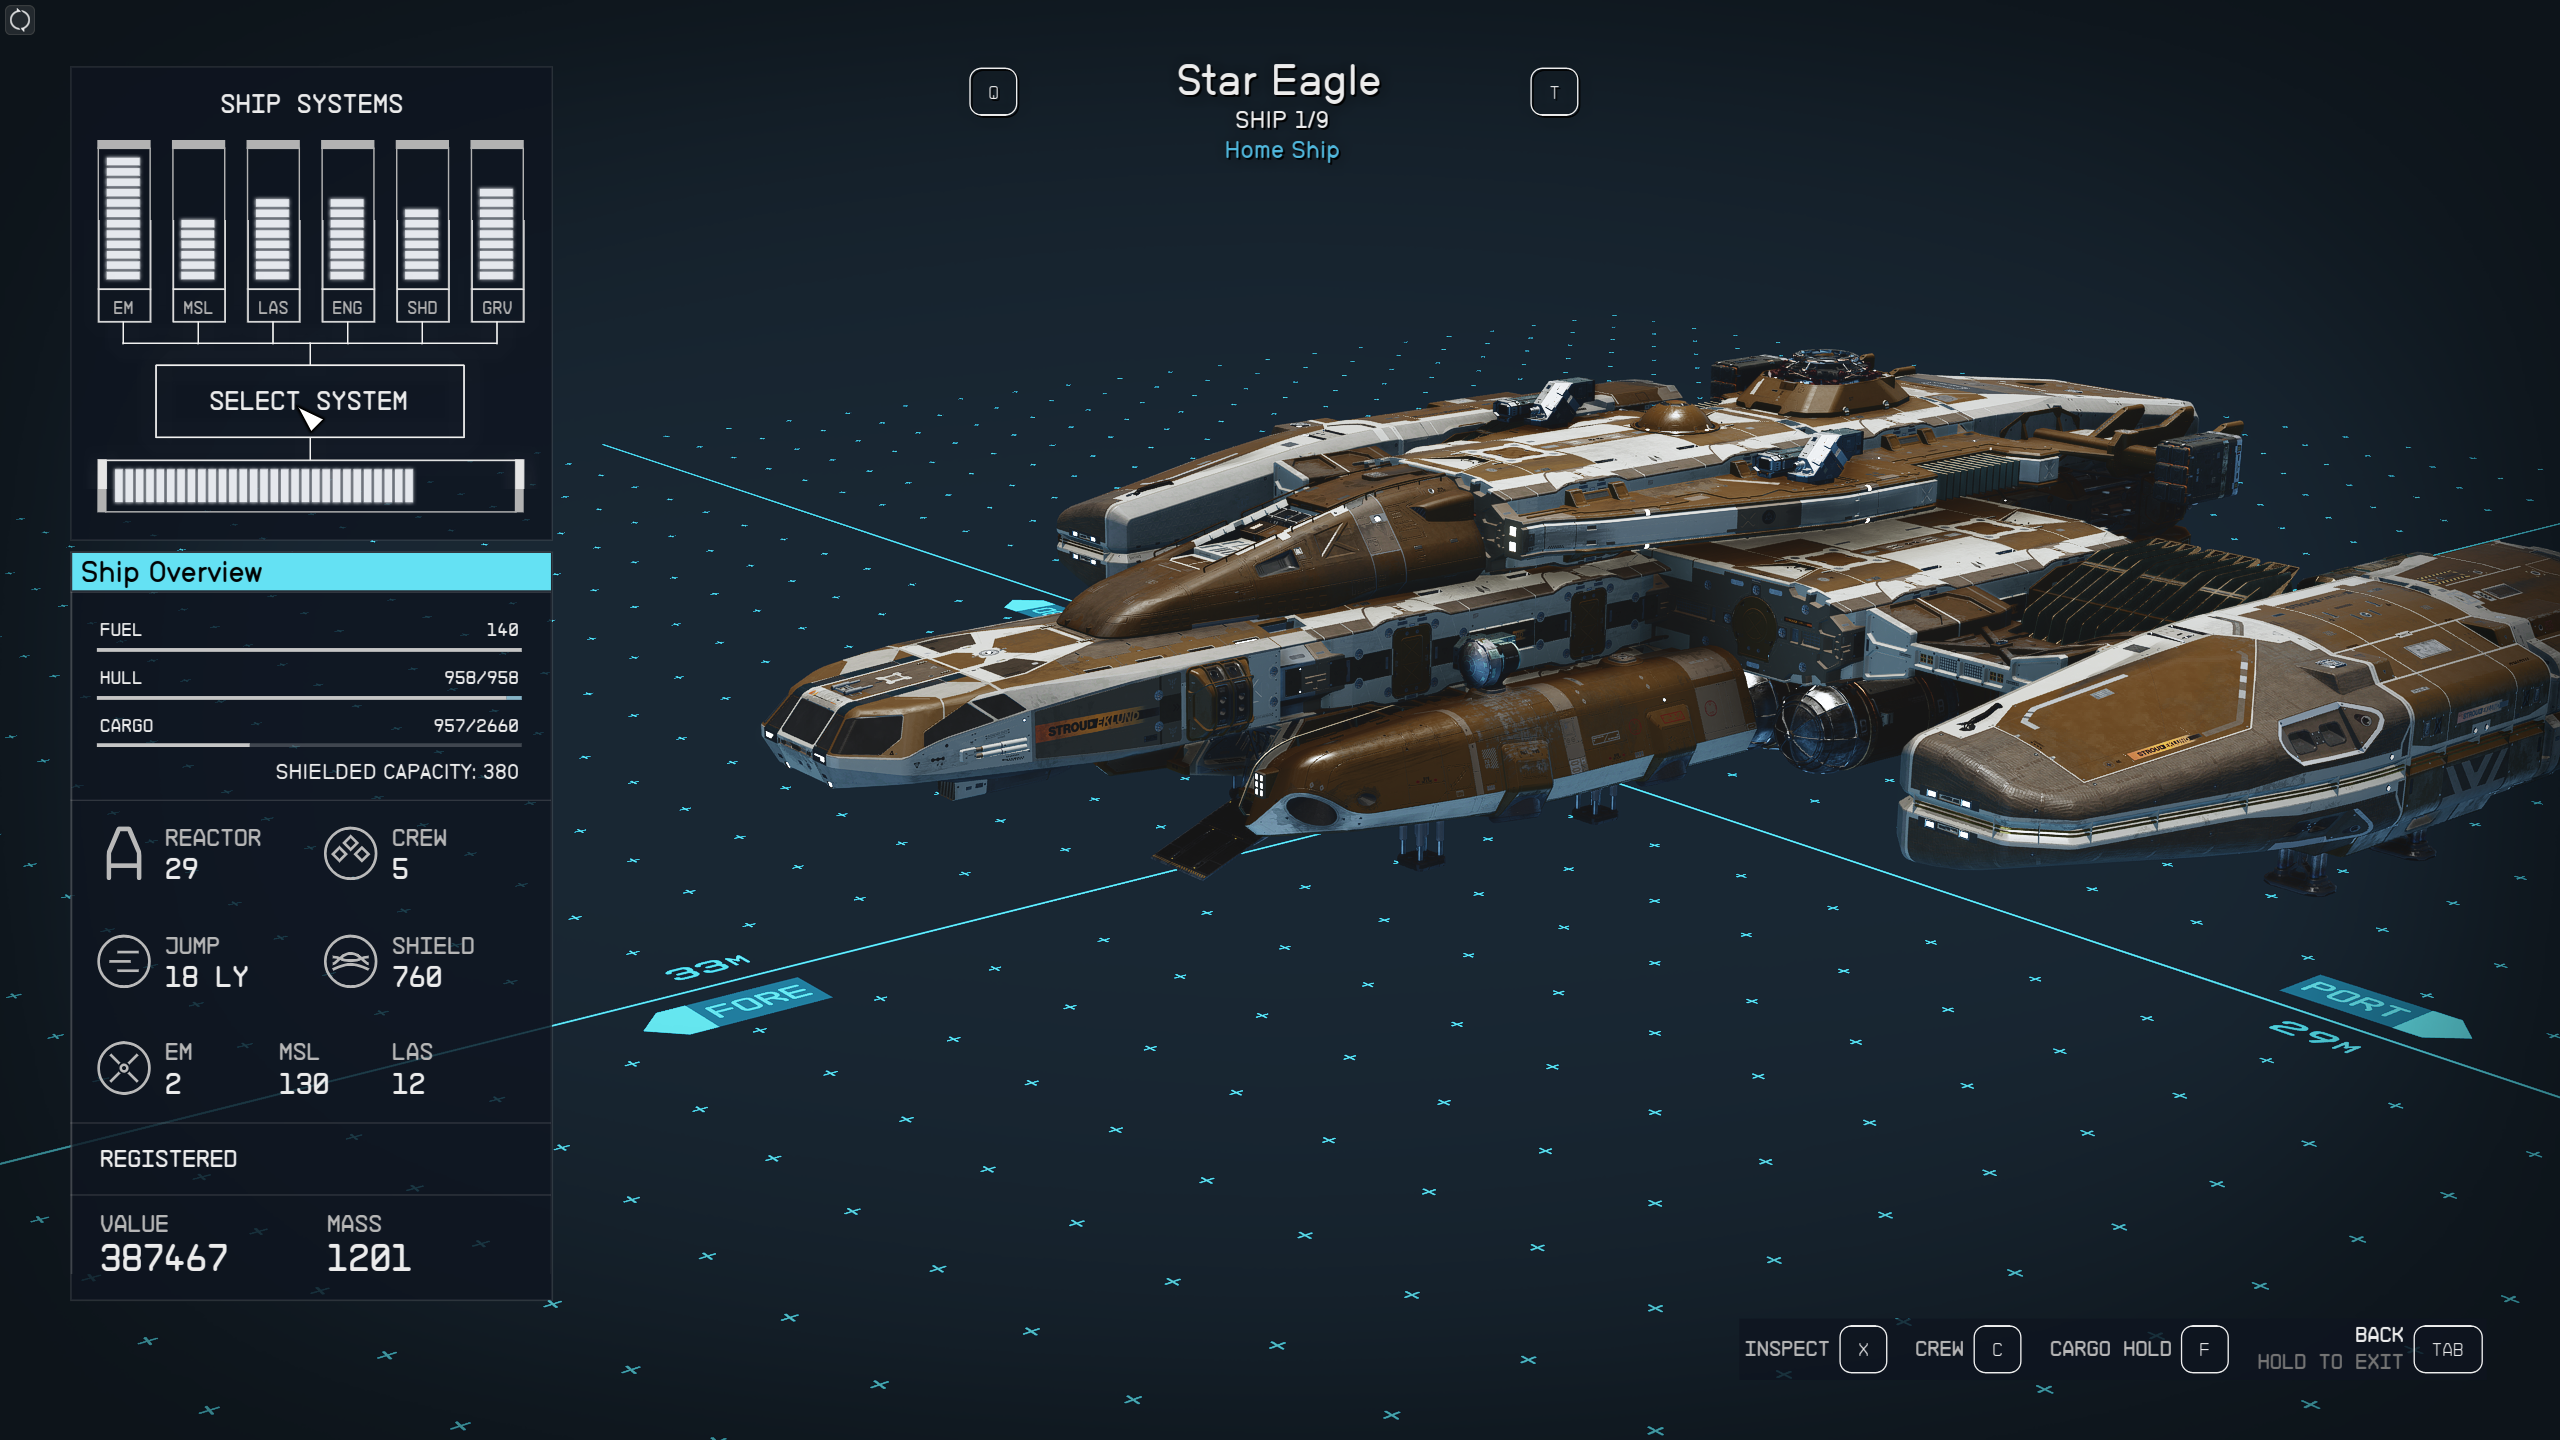 Star eagle starship status screen